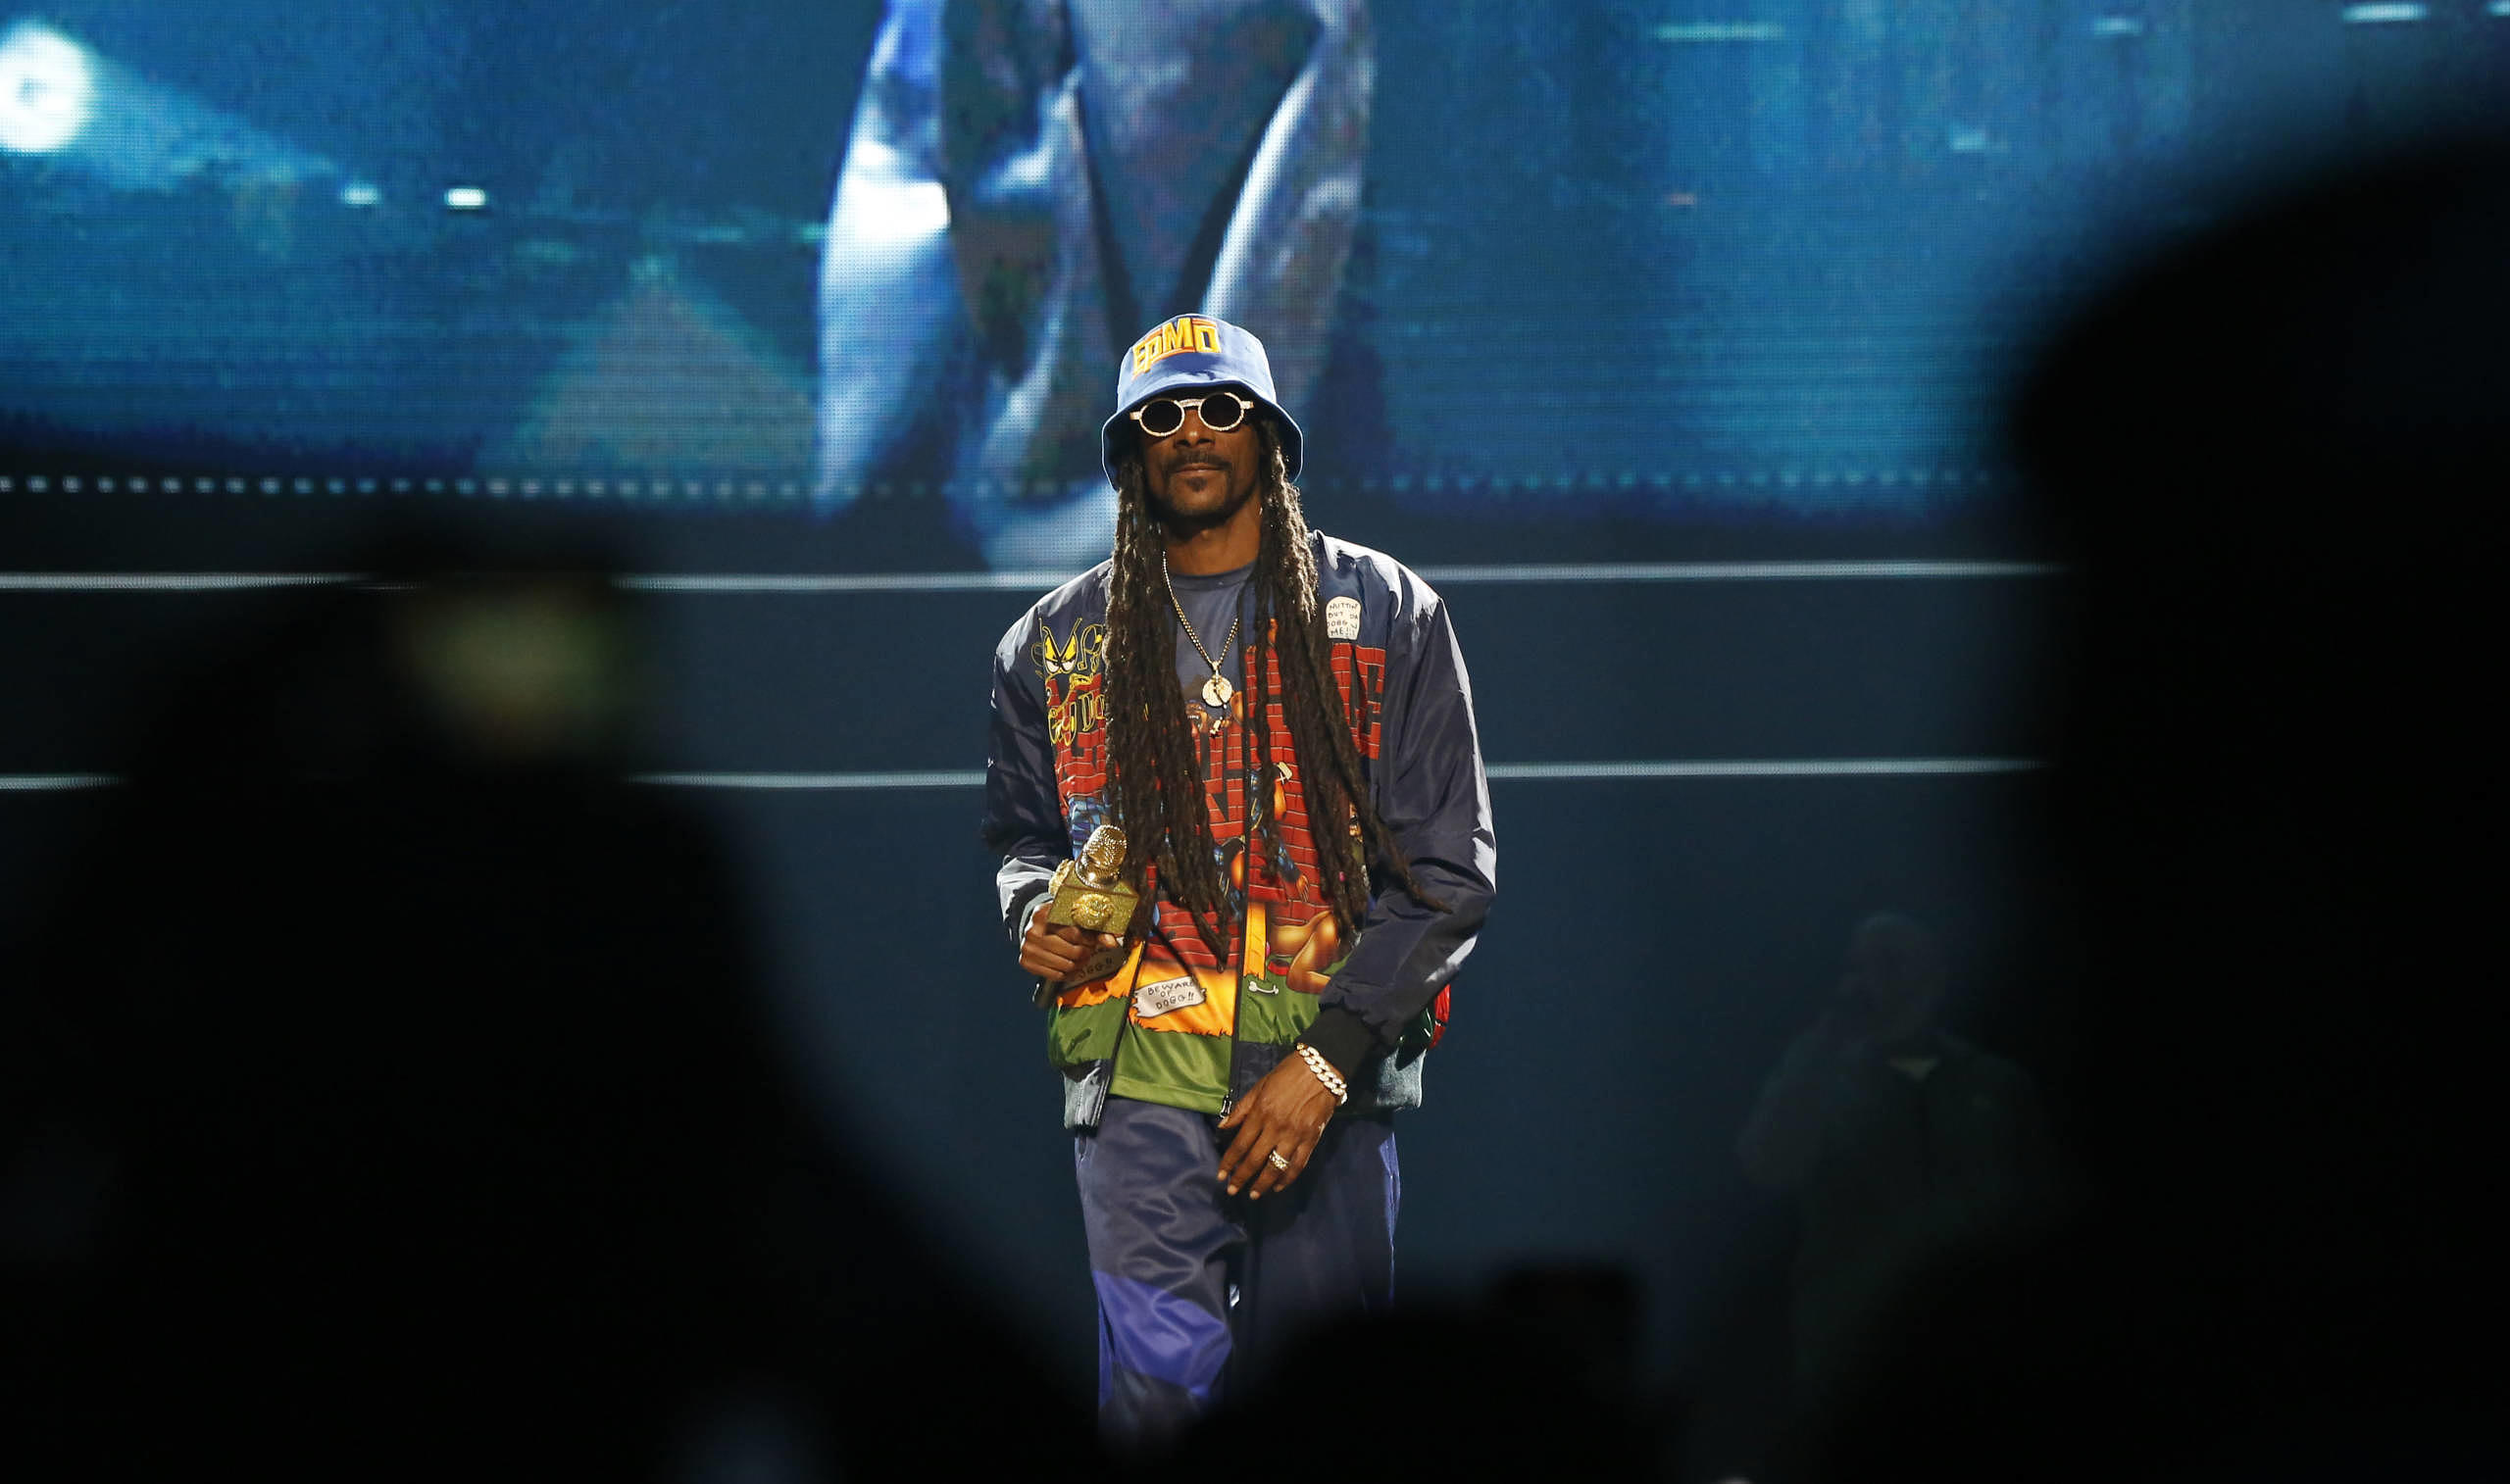 Rapper Snoop Dogg am 02 Oktober 2021 in Las Vegas, Nevada. (Foto von Gabe Ginsberg/Getty Images for RMG)